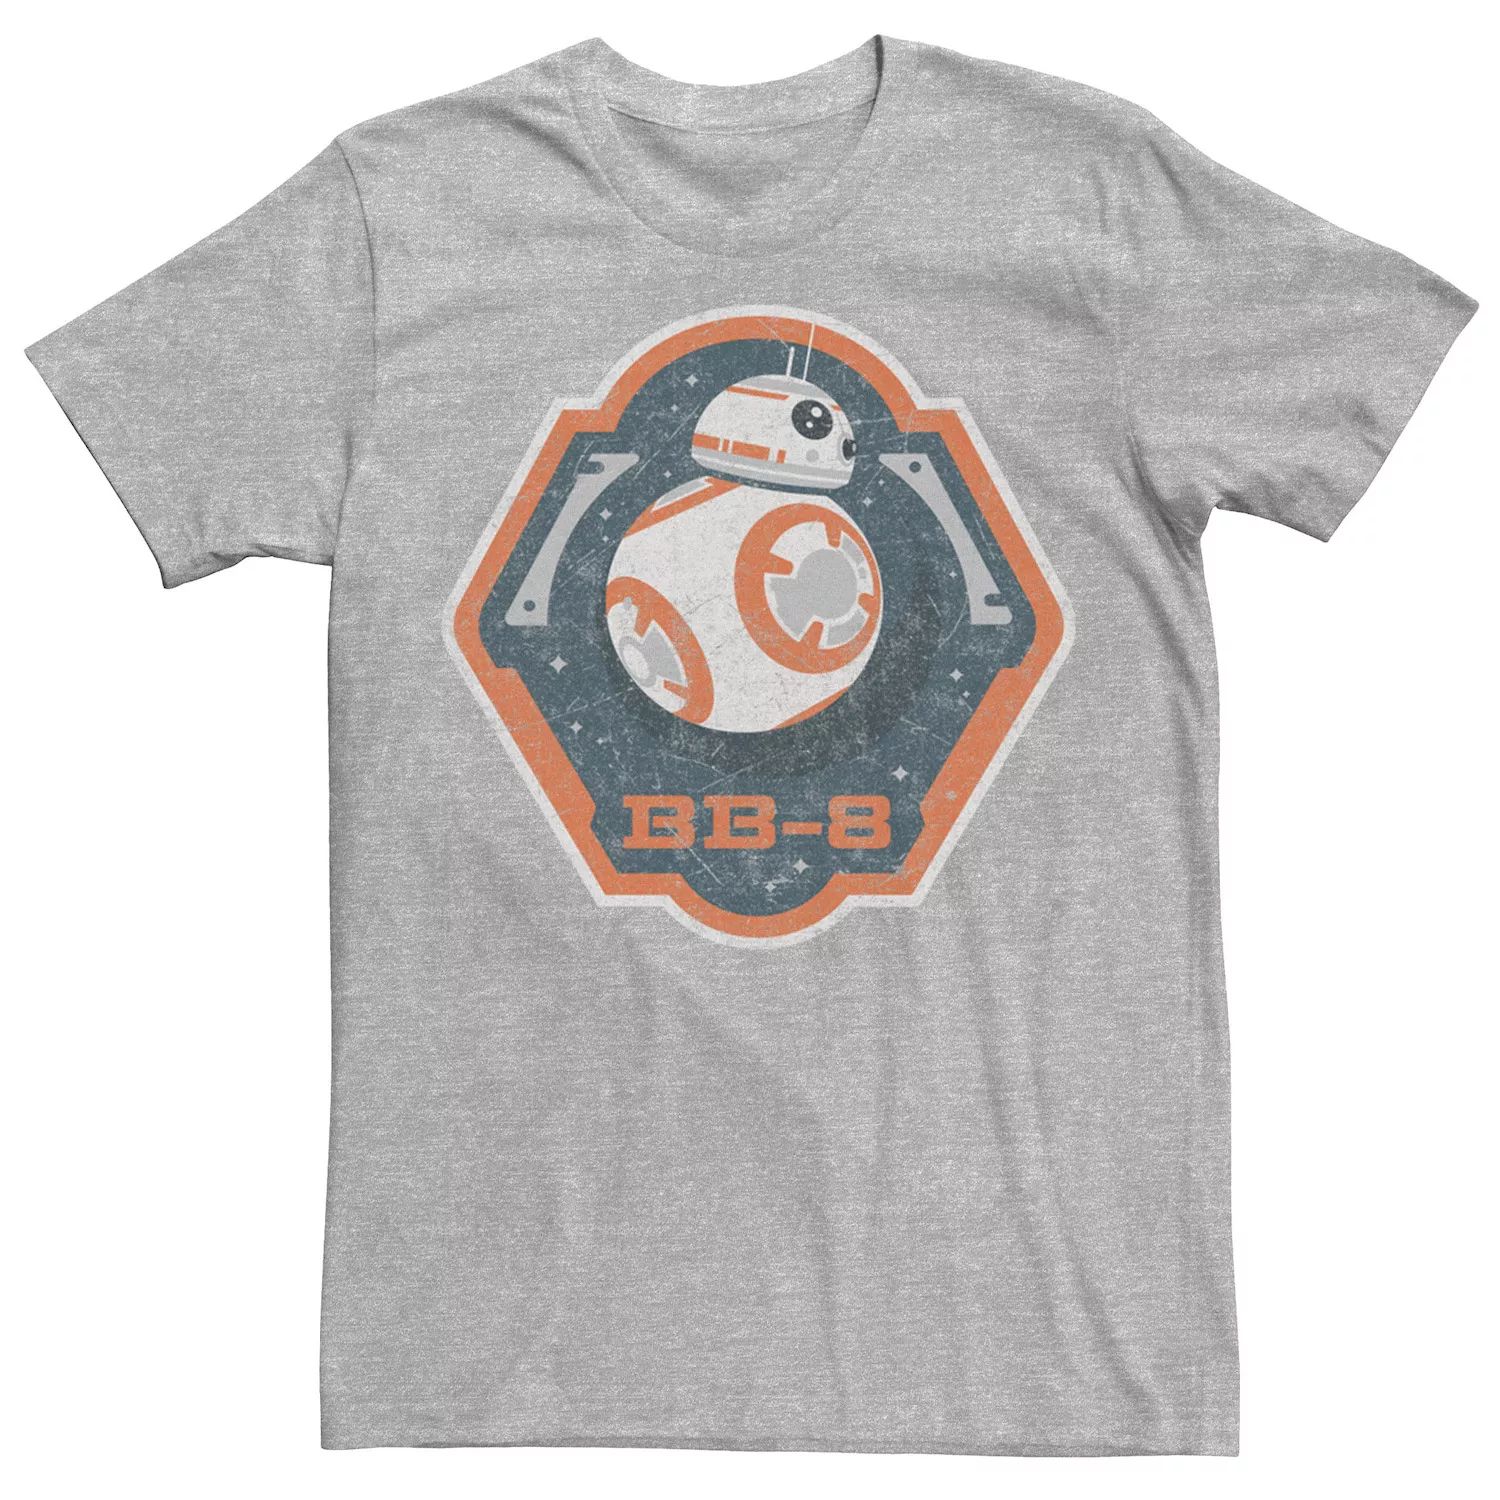 

Мужская футболка с потертым рисунком BB-8 и значком Star Wars